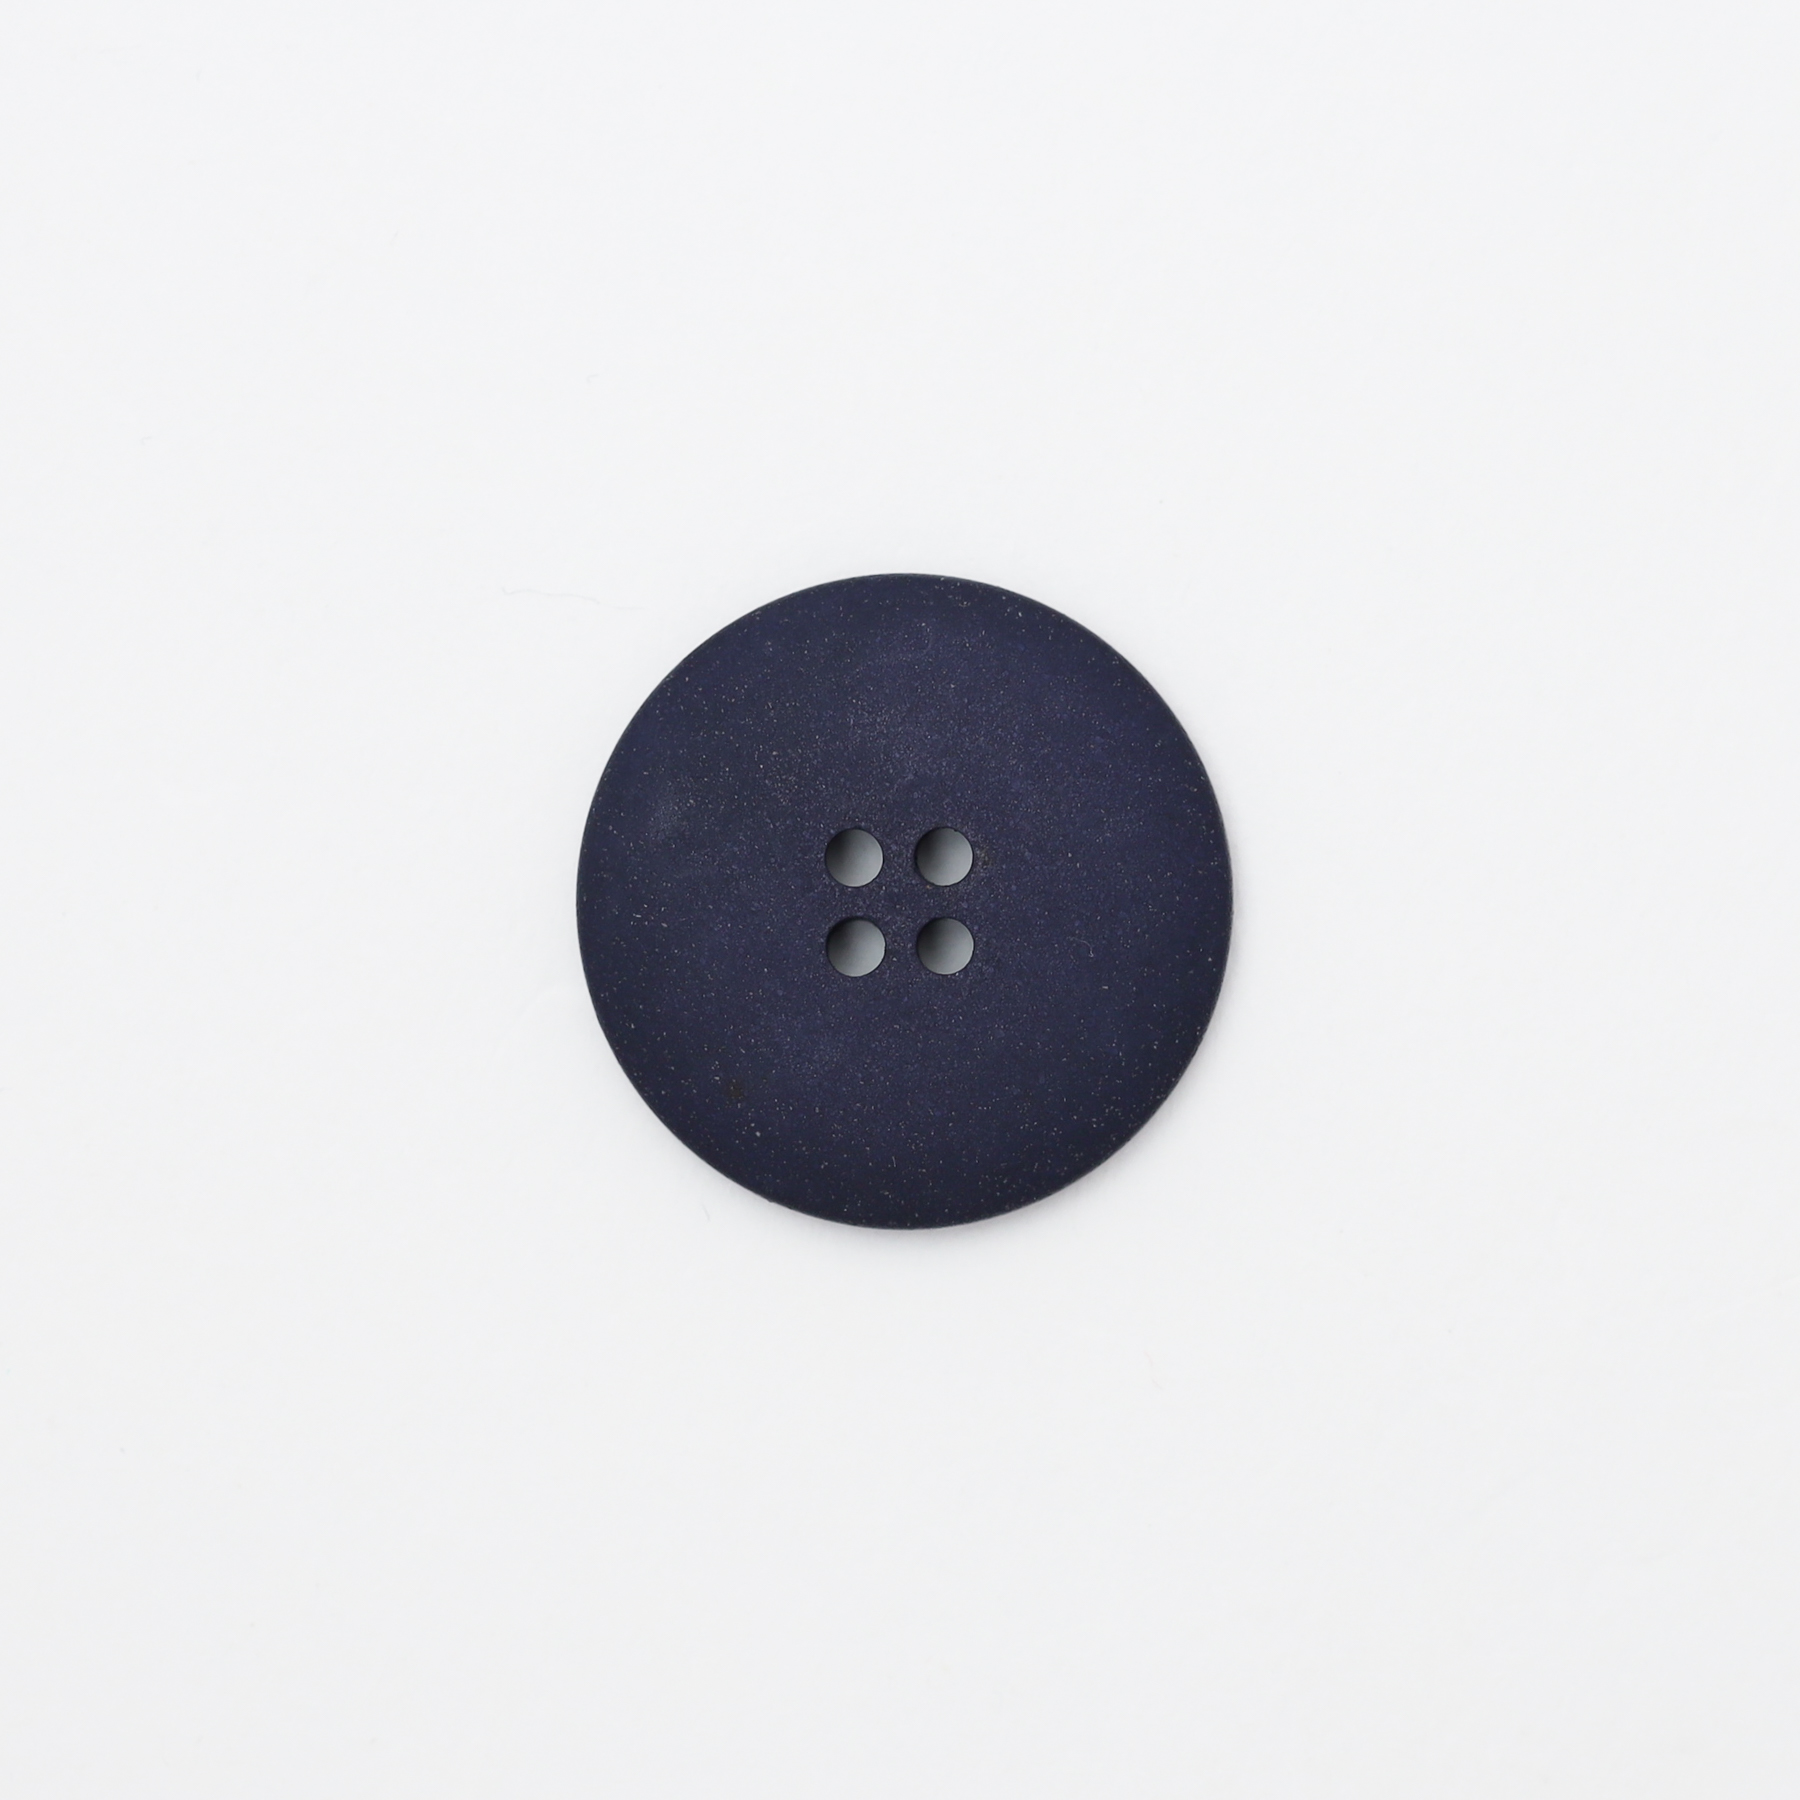 Hemp Button 20mm - French Blue